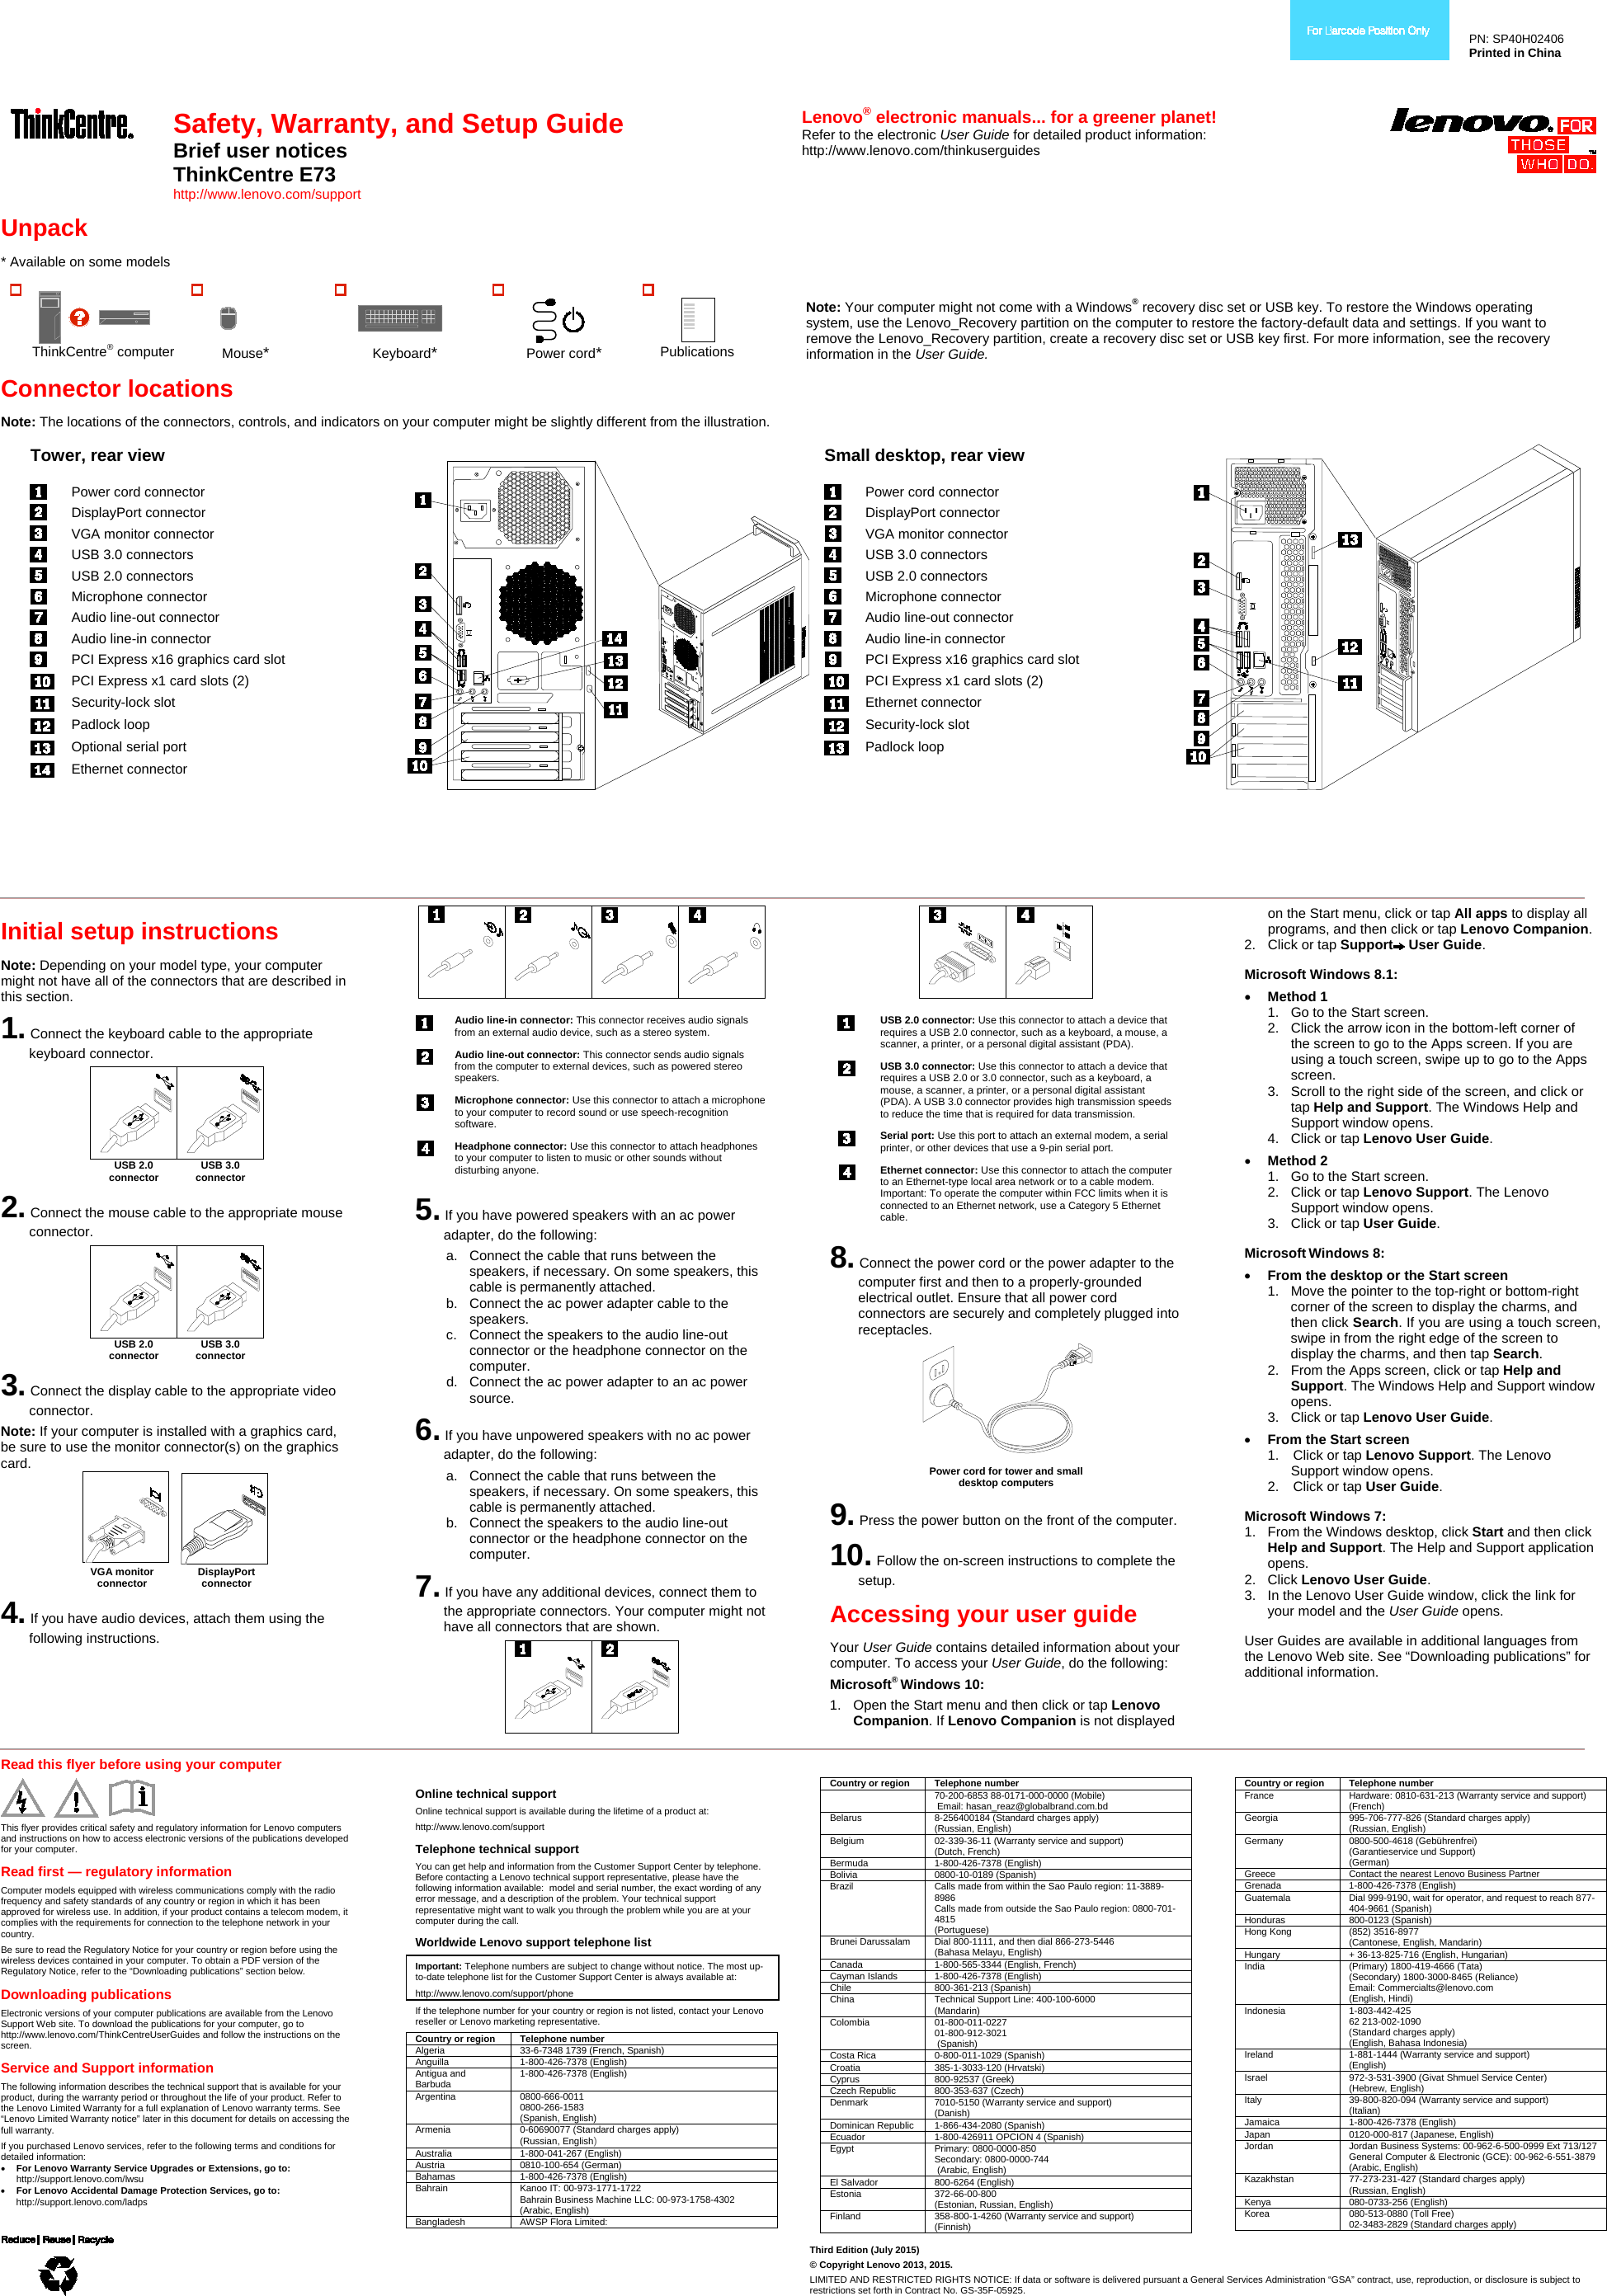 Page 1 of 2 - Lenovo E73 Swsg En Safety, Warranty, And Setup Guide User Manual (English) Warranty Desktop (Think Centre) - Type 10DR